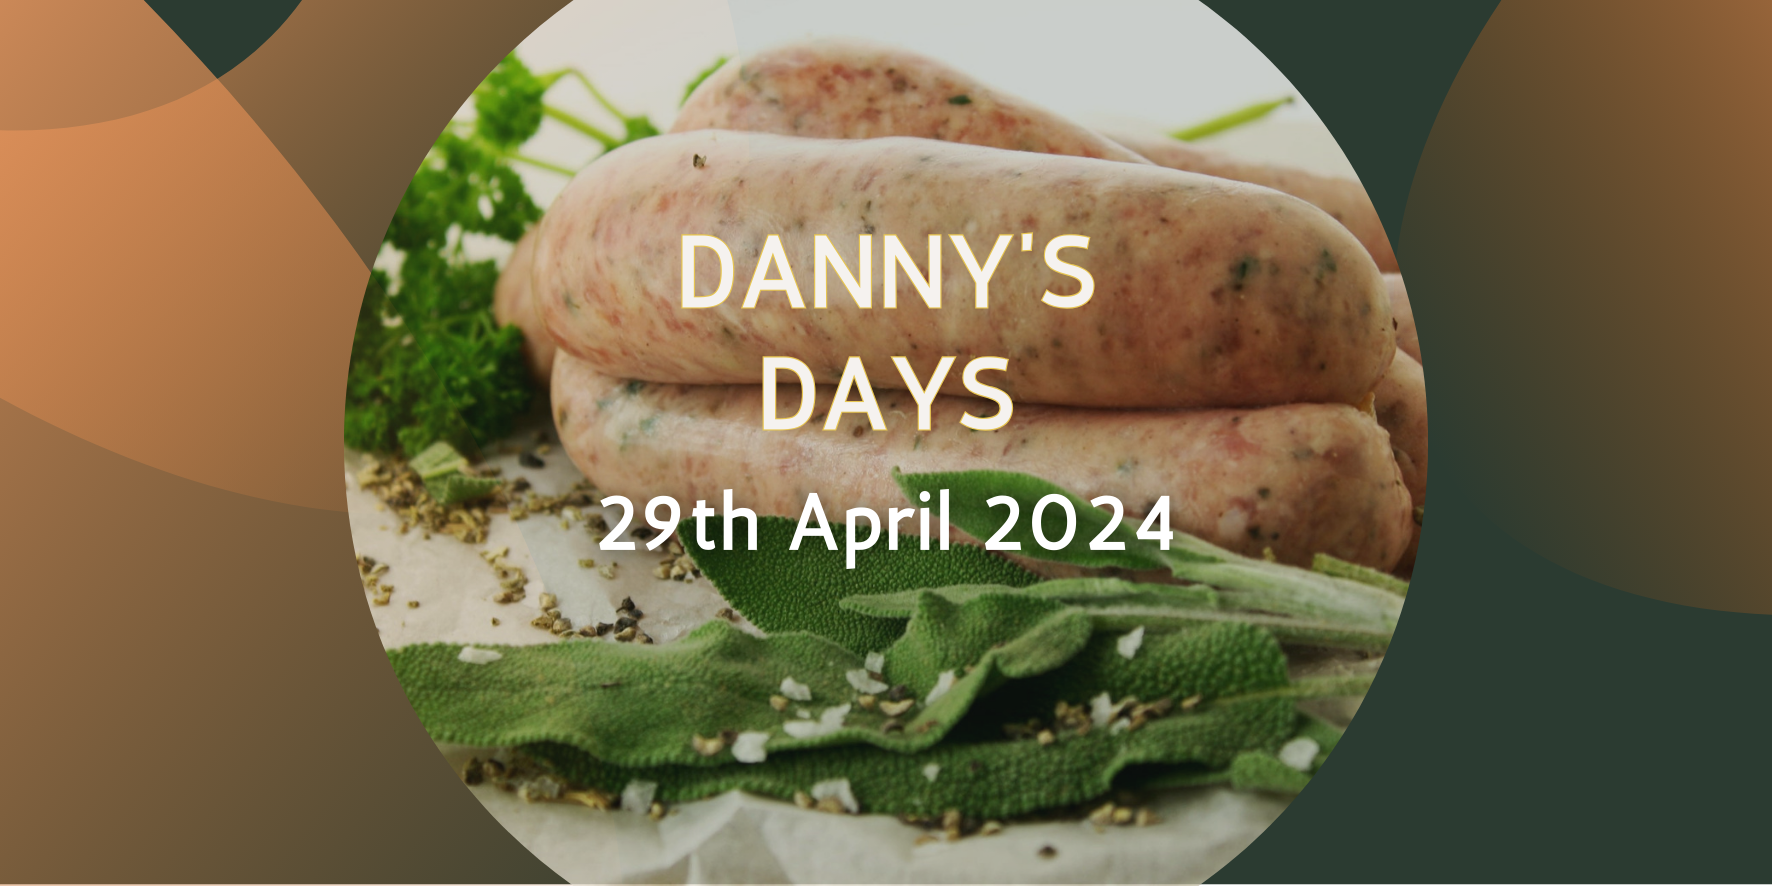 Danny's Days - 29th April 2024